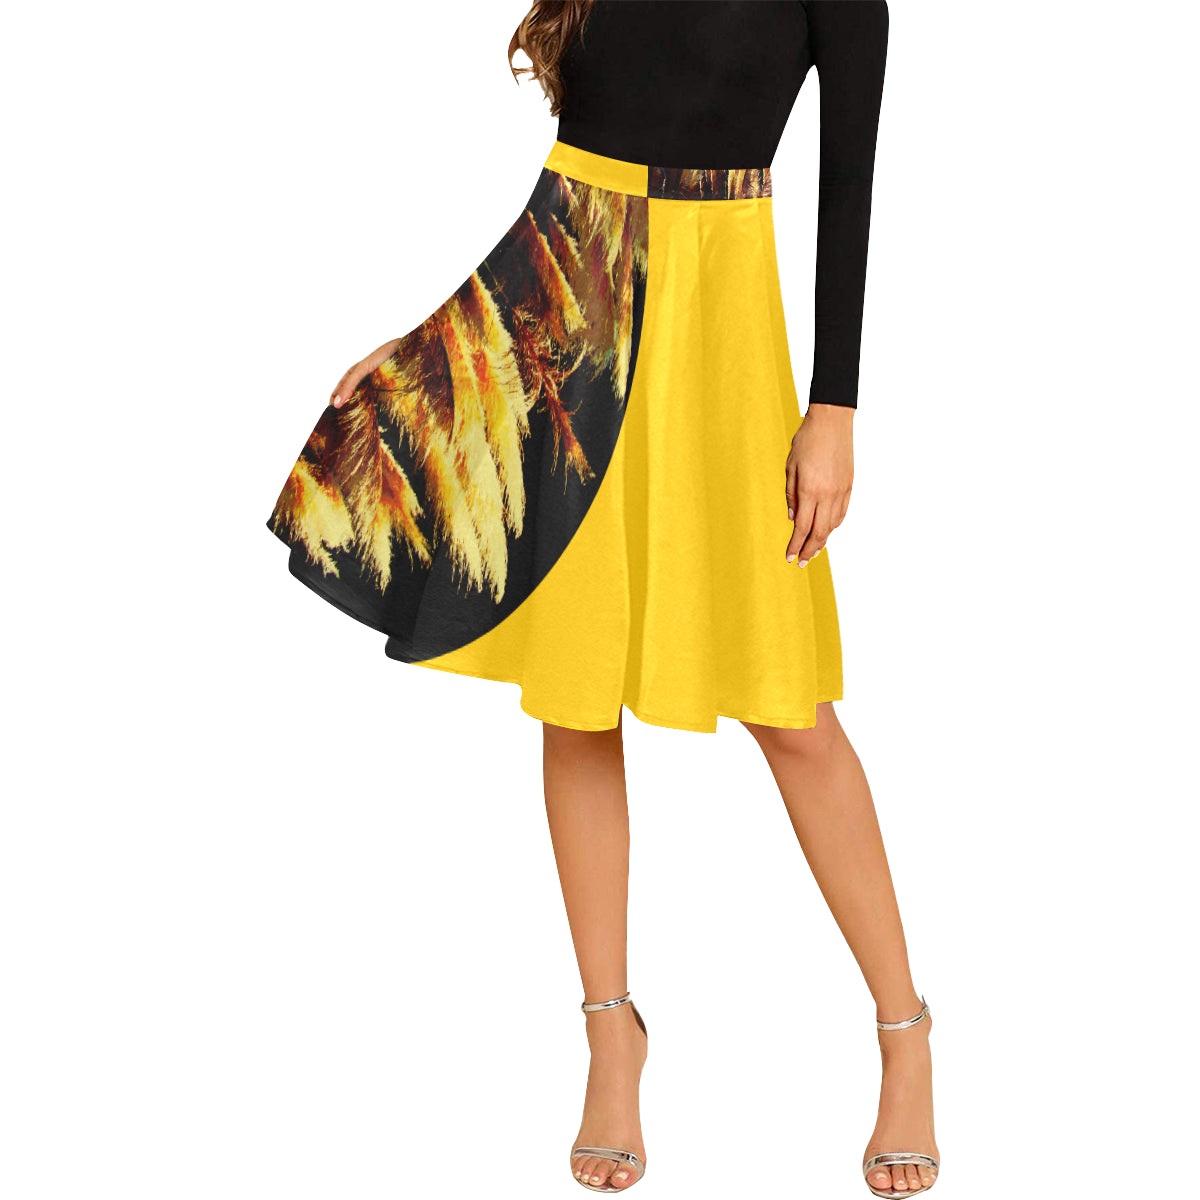 Kalent Zaiz Pleats Skirt Women's Midi Skirt (Yellow) - Designed by Kalent Zaiz